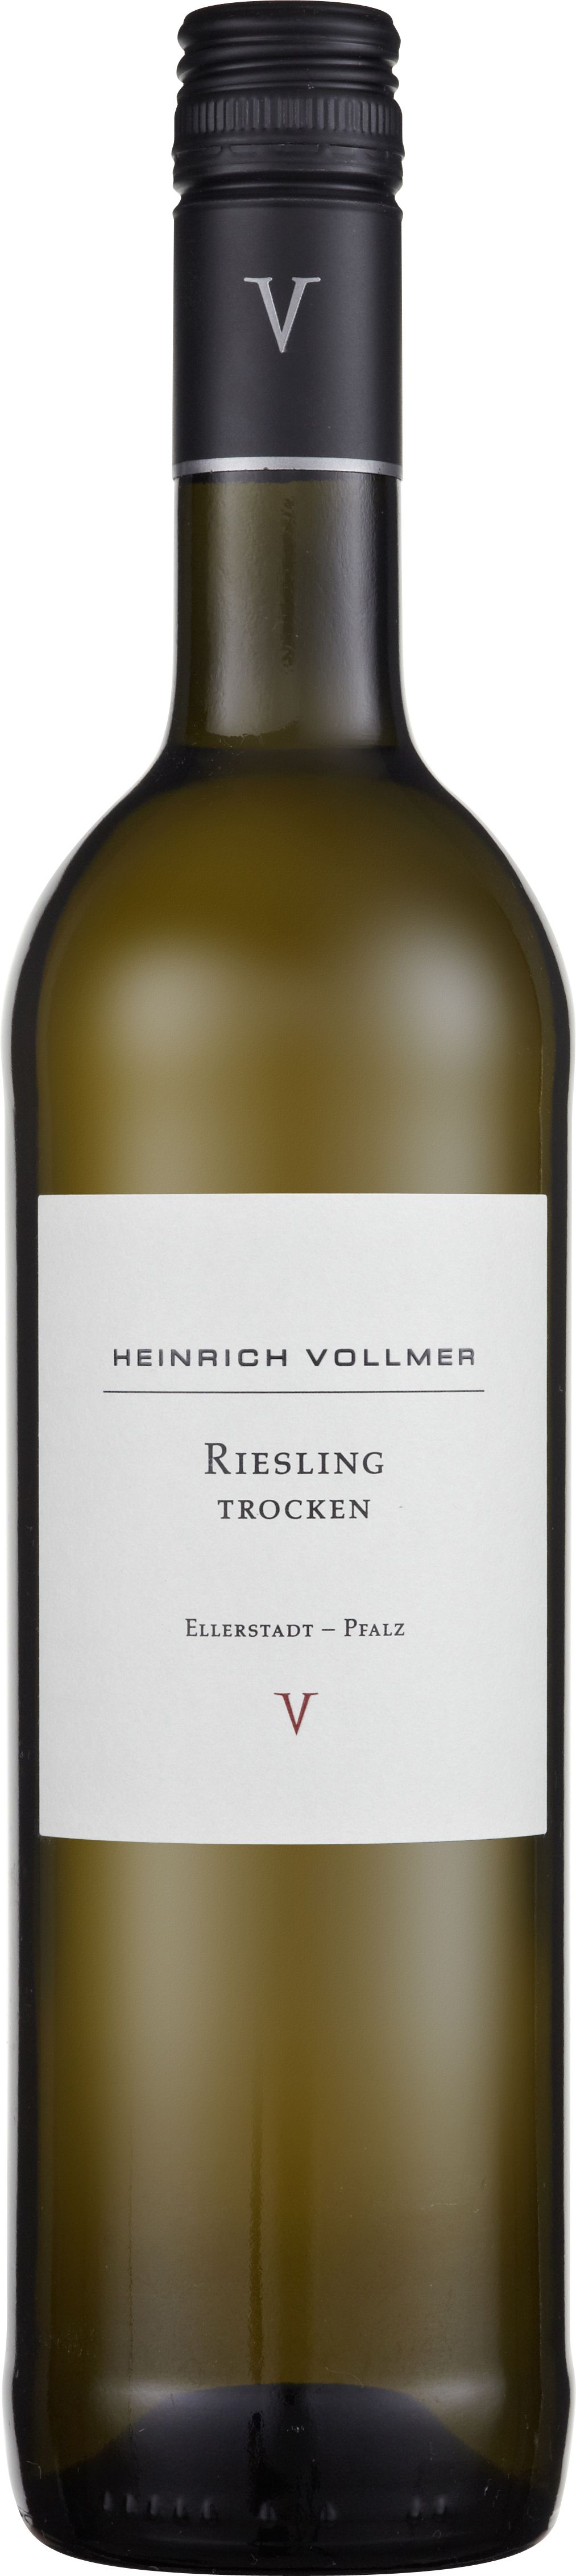 Vollmer Riesling Pfalz 7,03 € trocken - vegan !